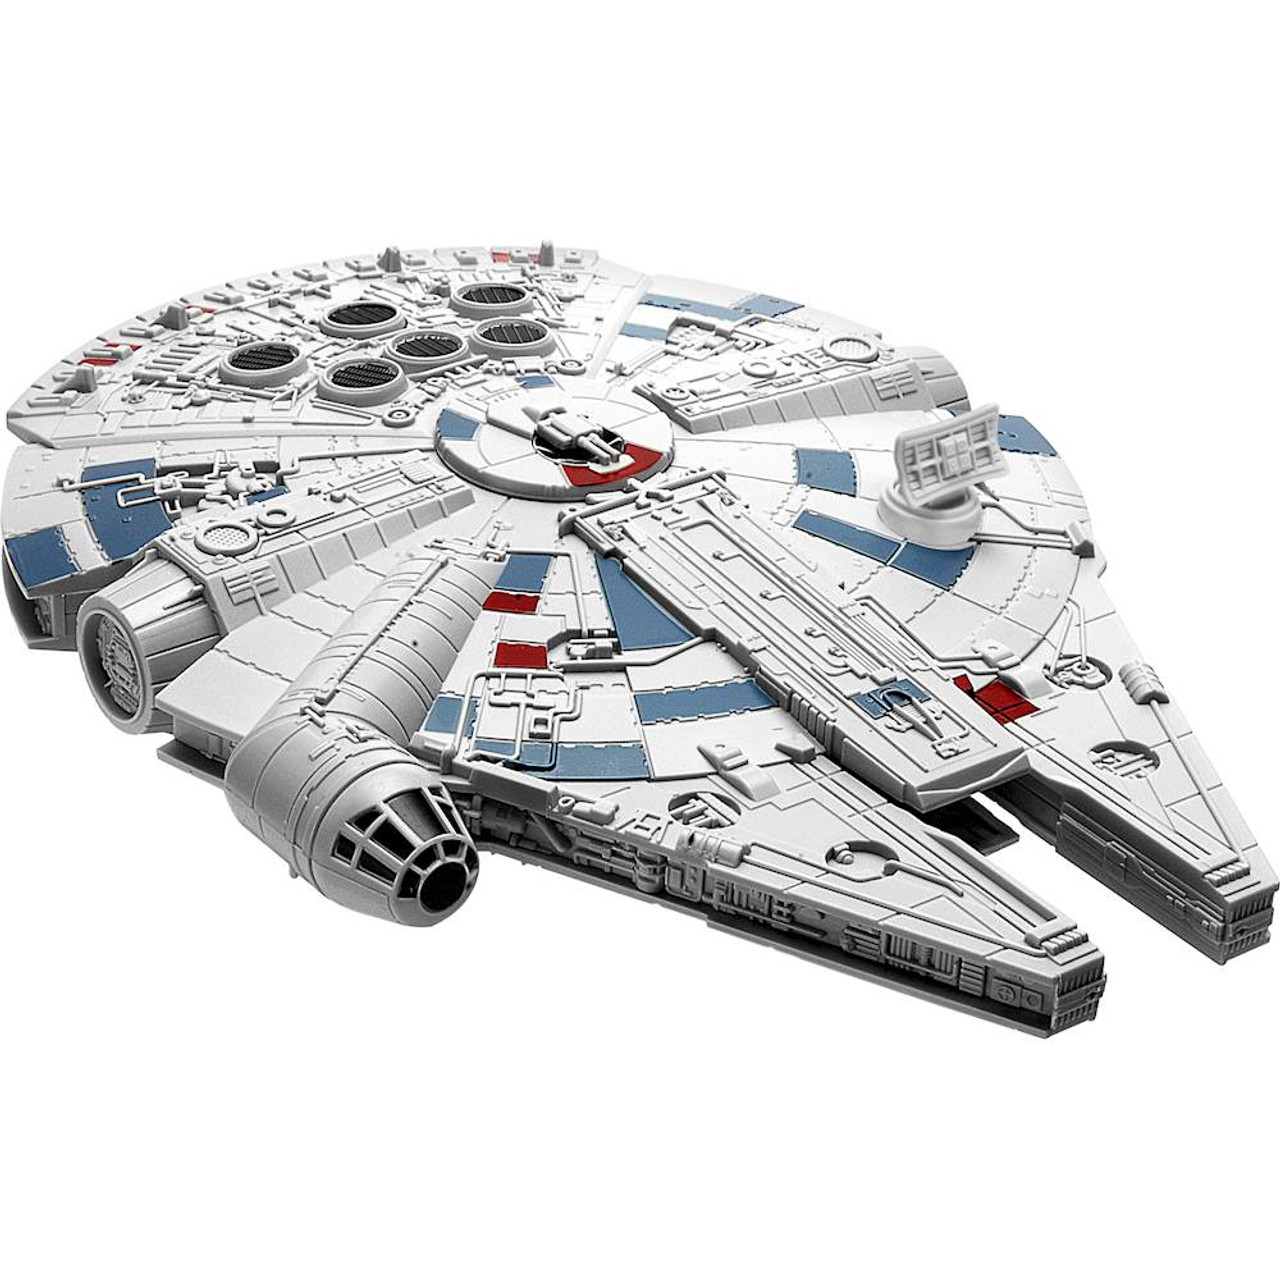 1/164 Star Wars Millennium Falcon - Revell 85-1668